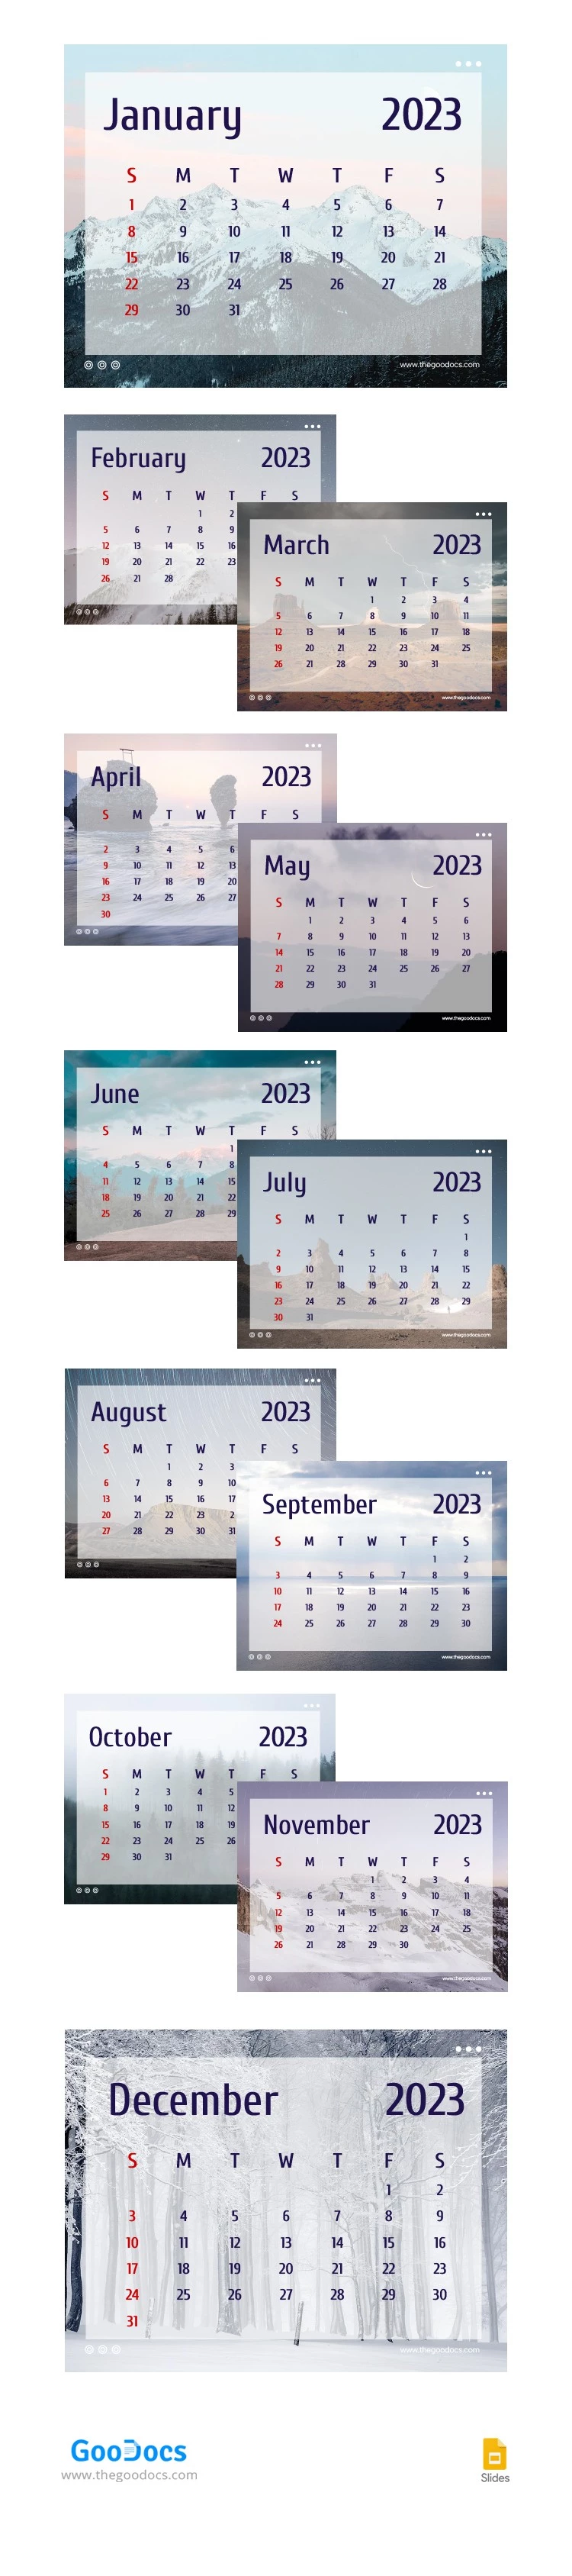 Calendario della natura 2023 - free Google Docs Template - 10064722